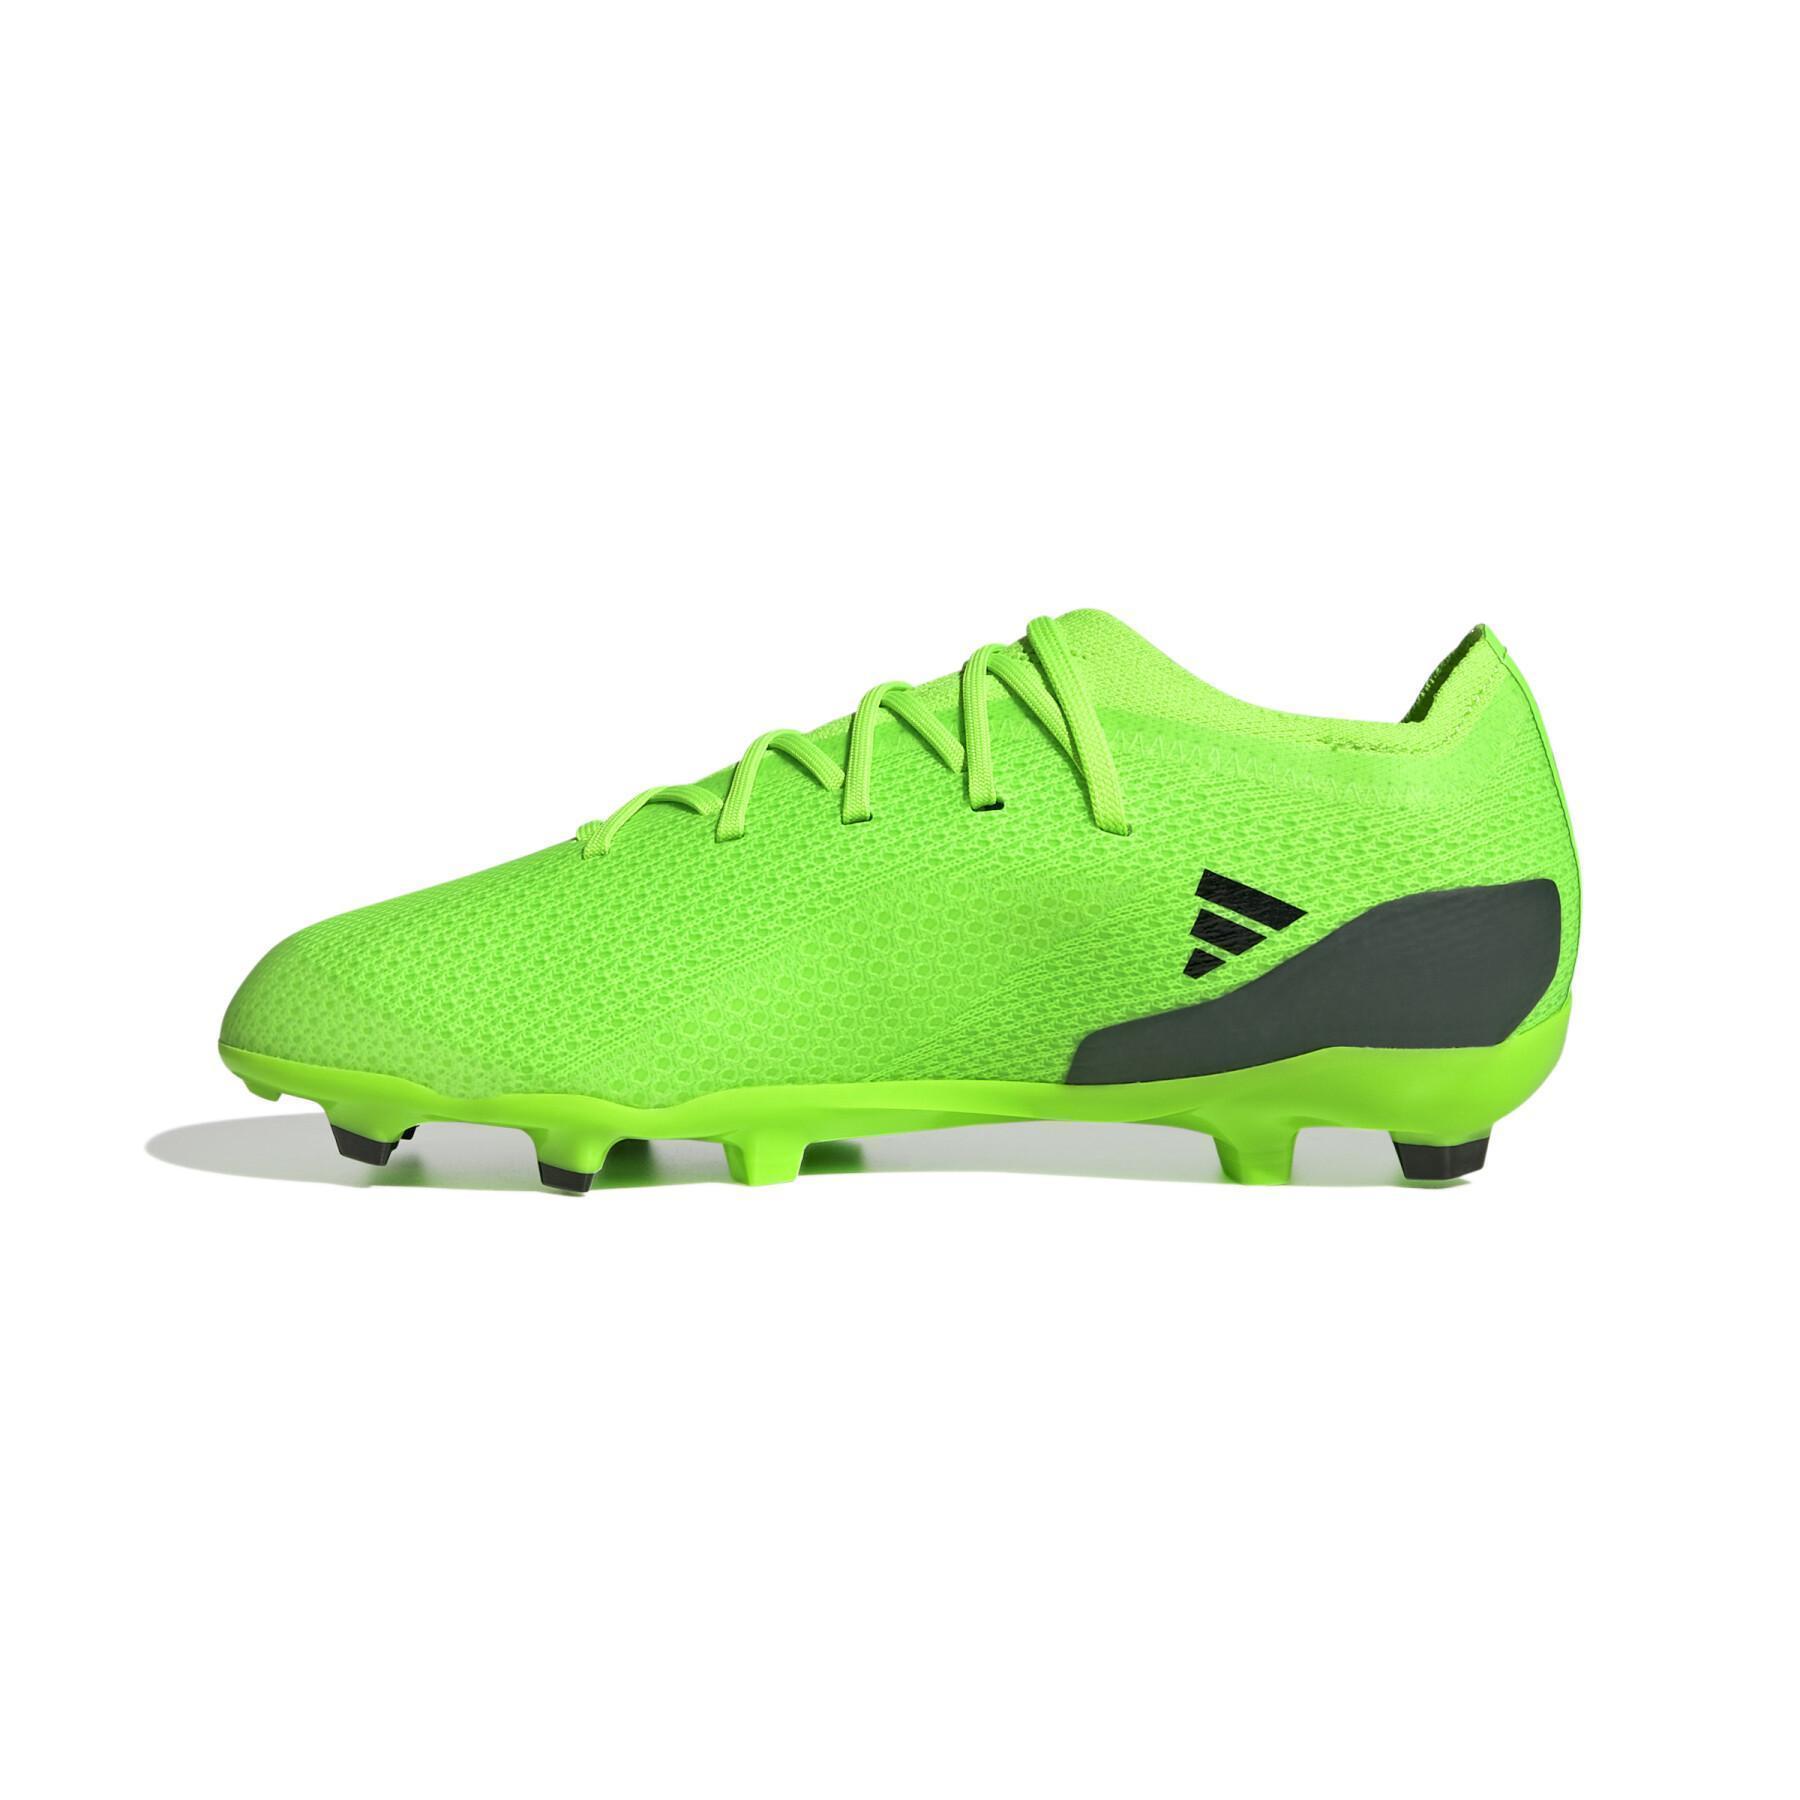 Chaussures de football enfant adidas X Speedportal.1 FG - Game Data Pack